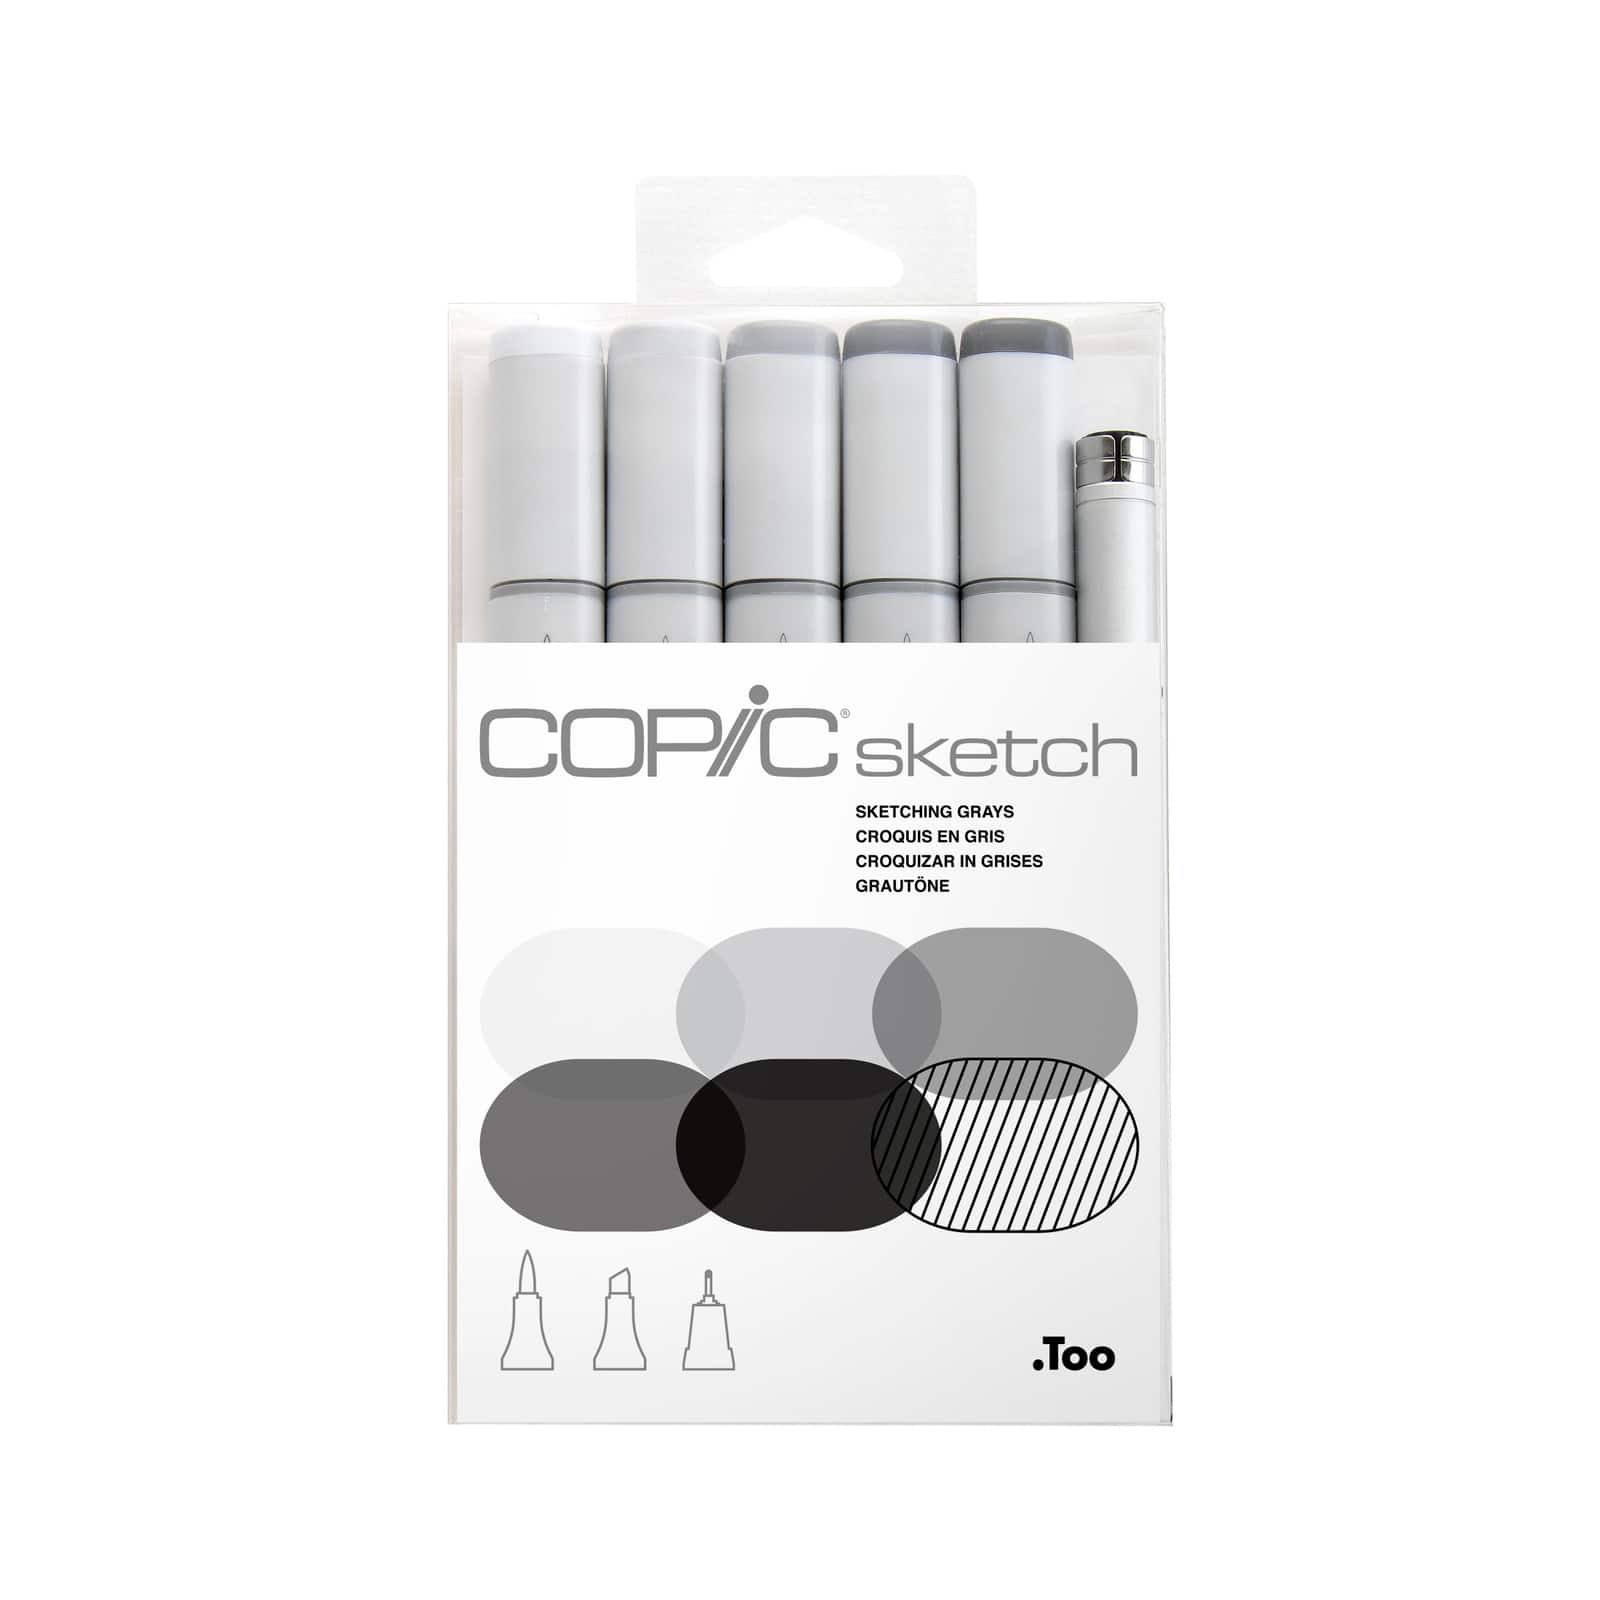 6 Packs: 6 ct. (36 total) Copic&#xAE; Sketch Marker Set, Sketching Grays